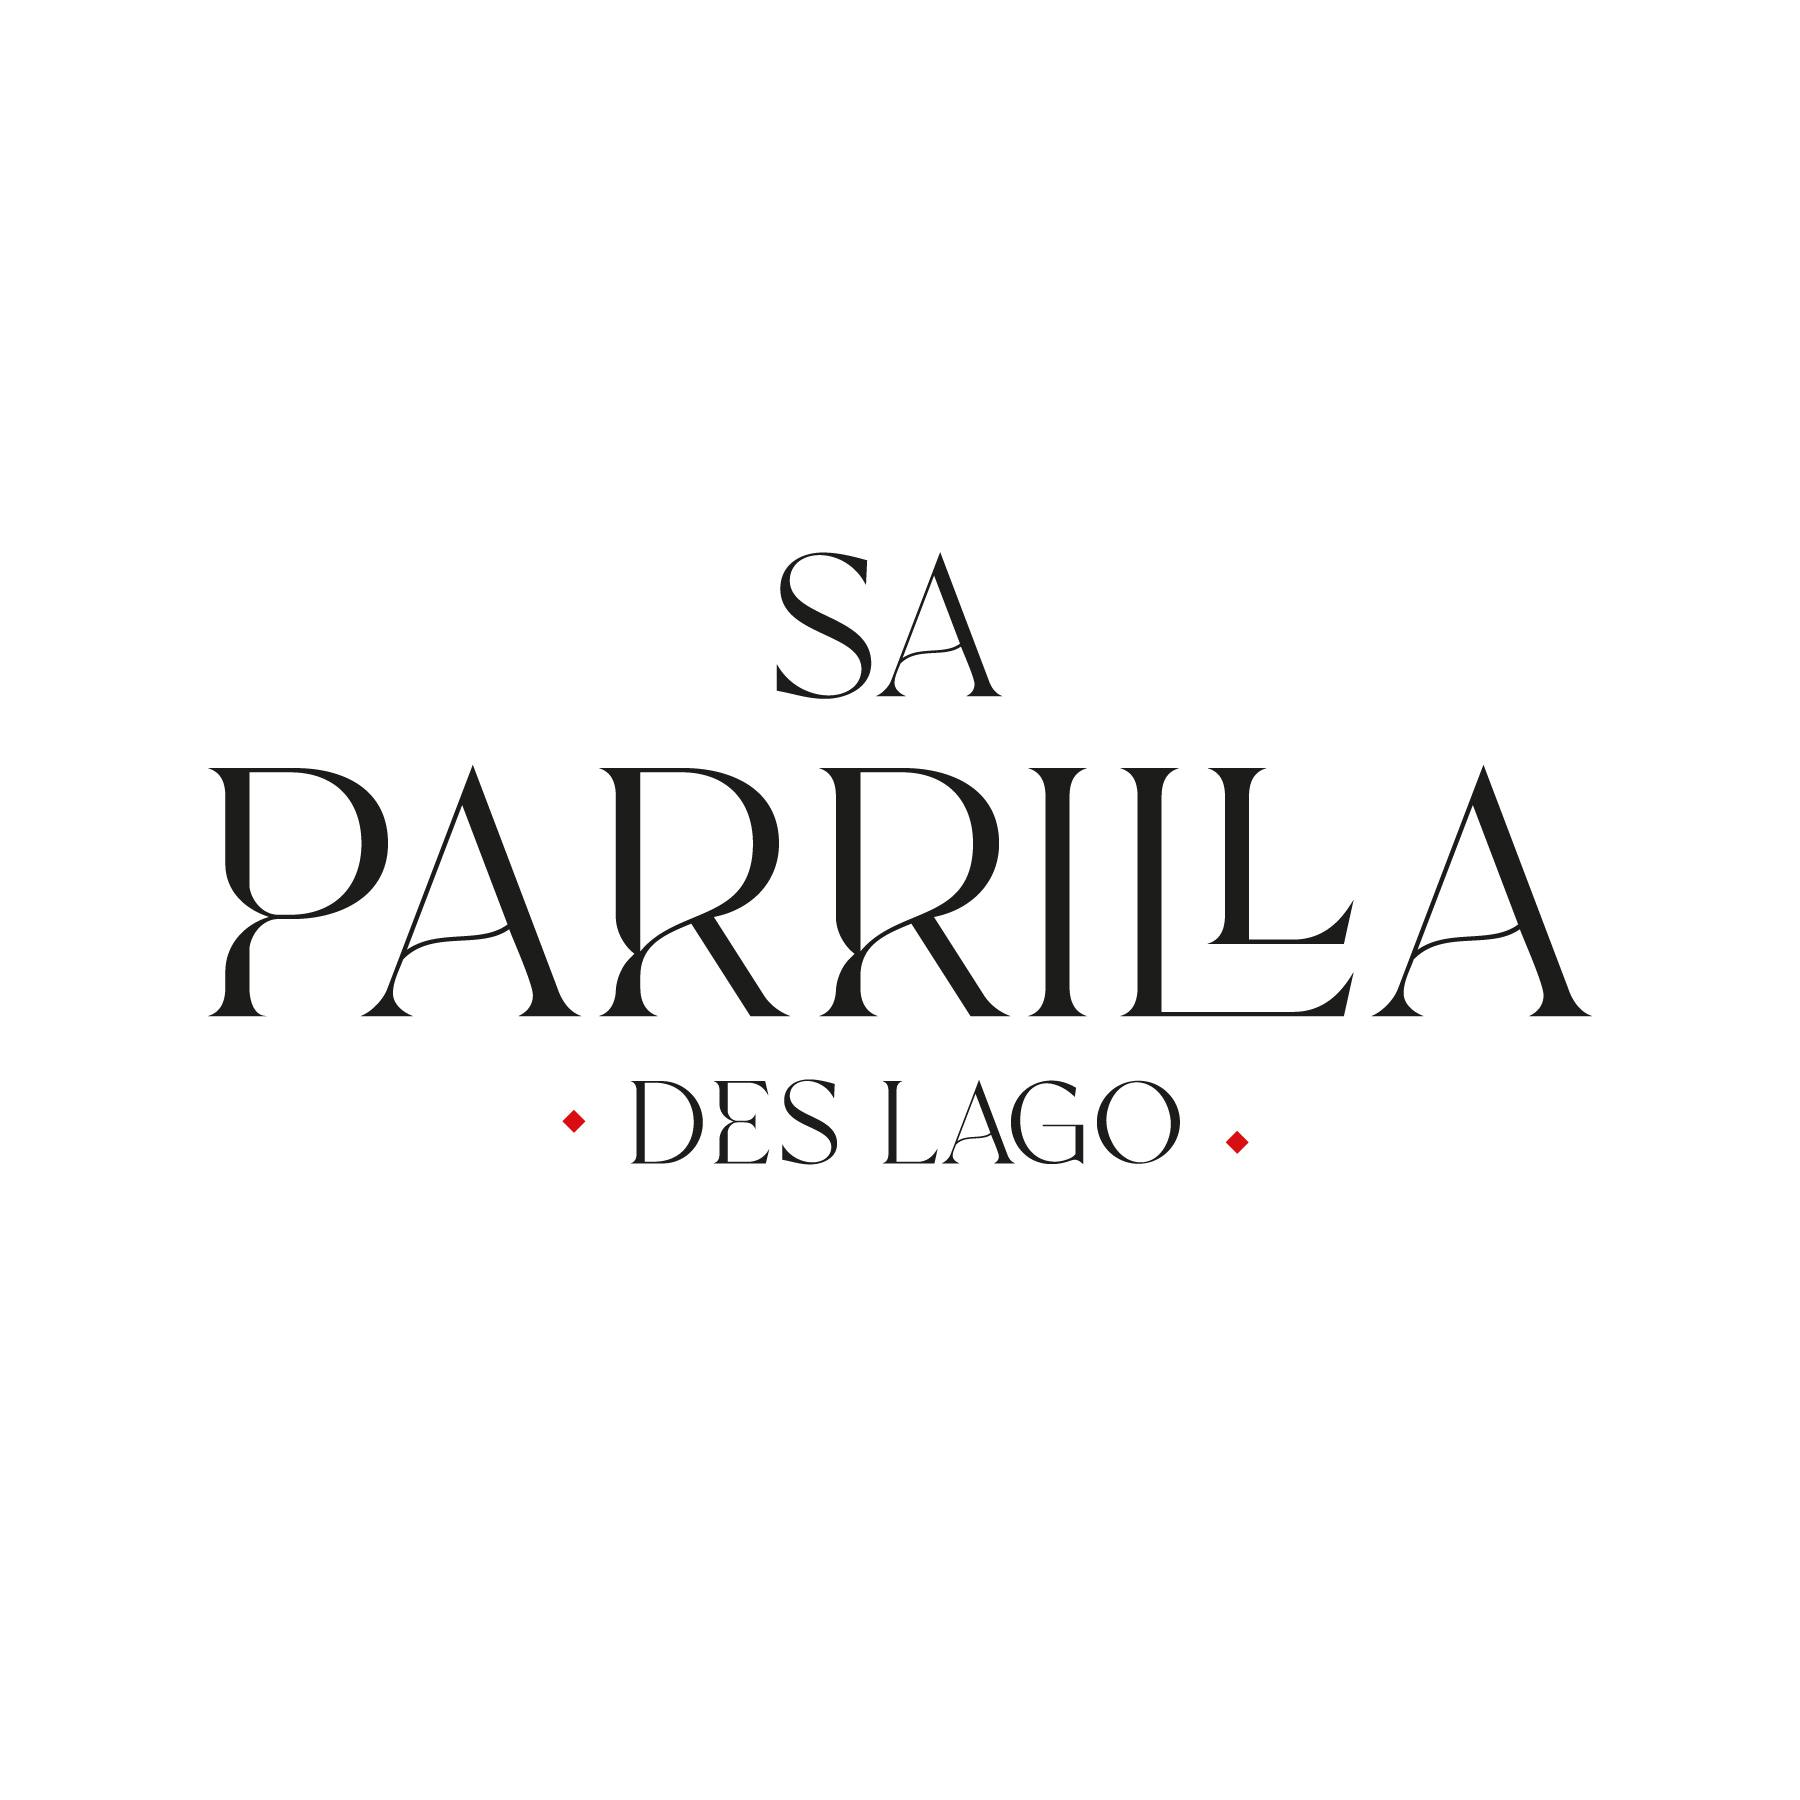 Logo SA PARRILLA DES LAGO